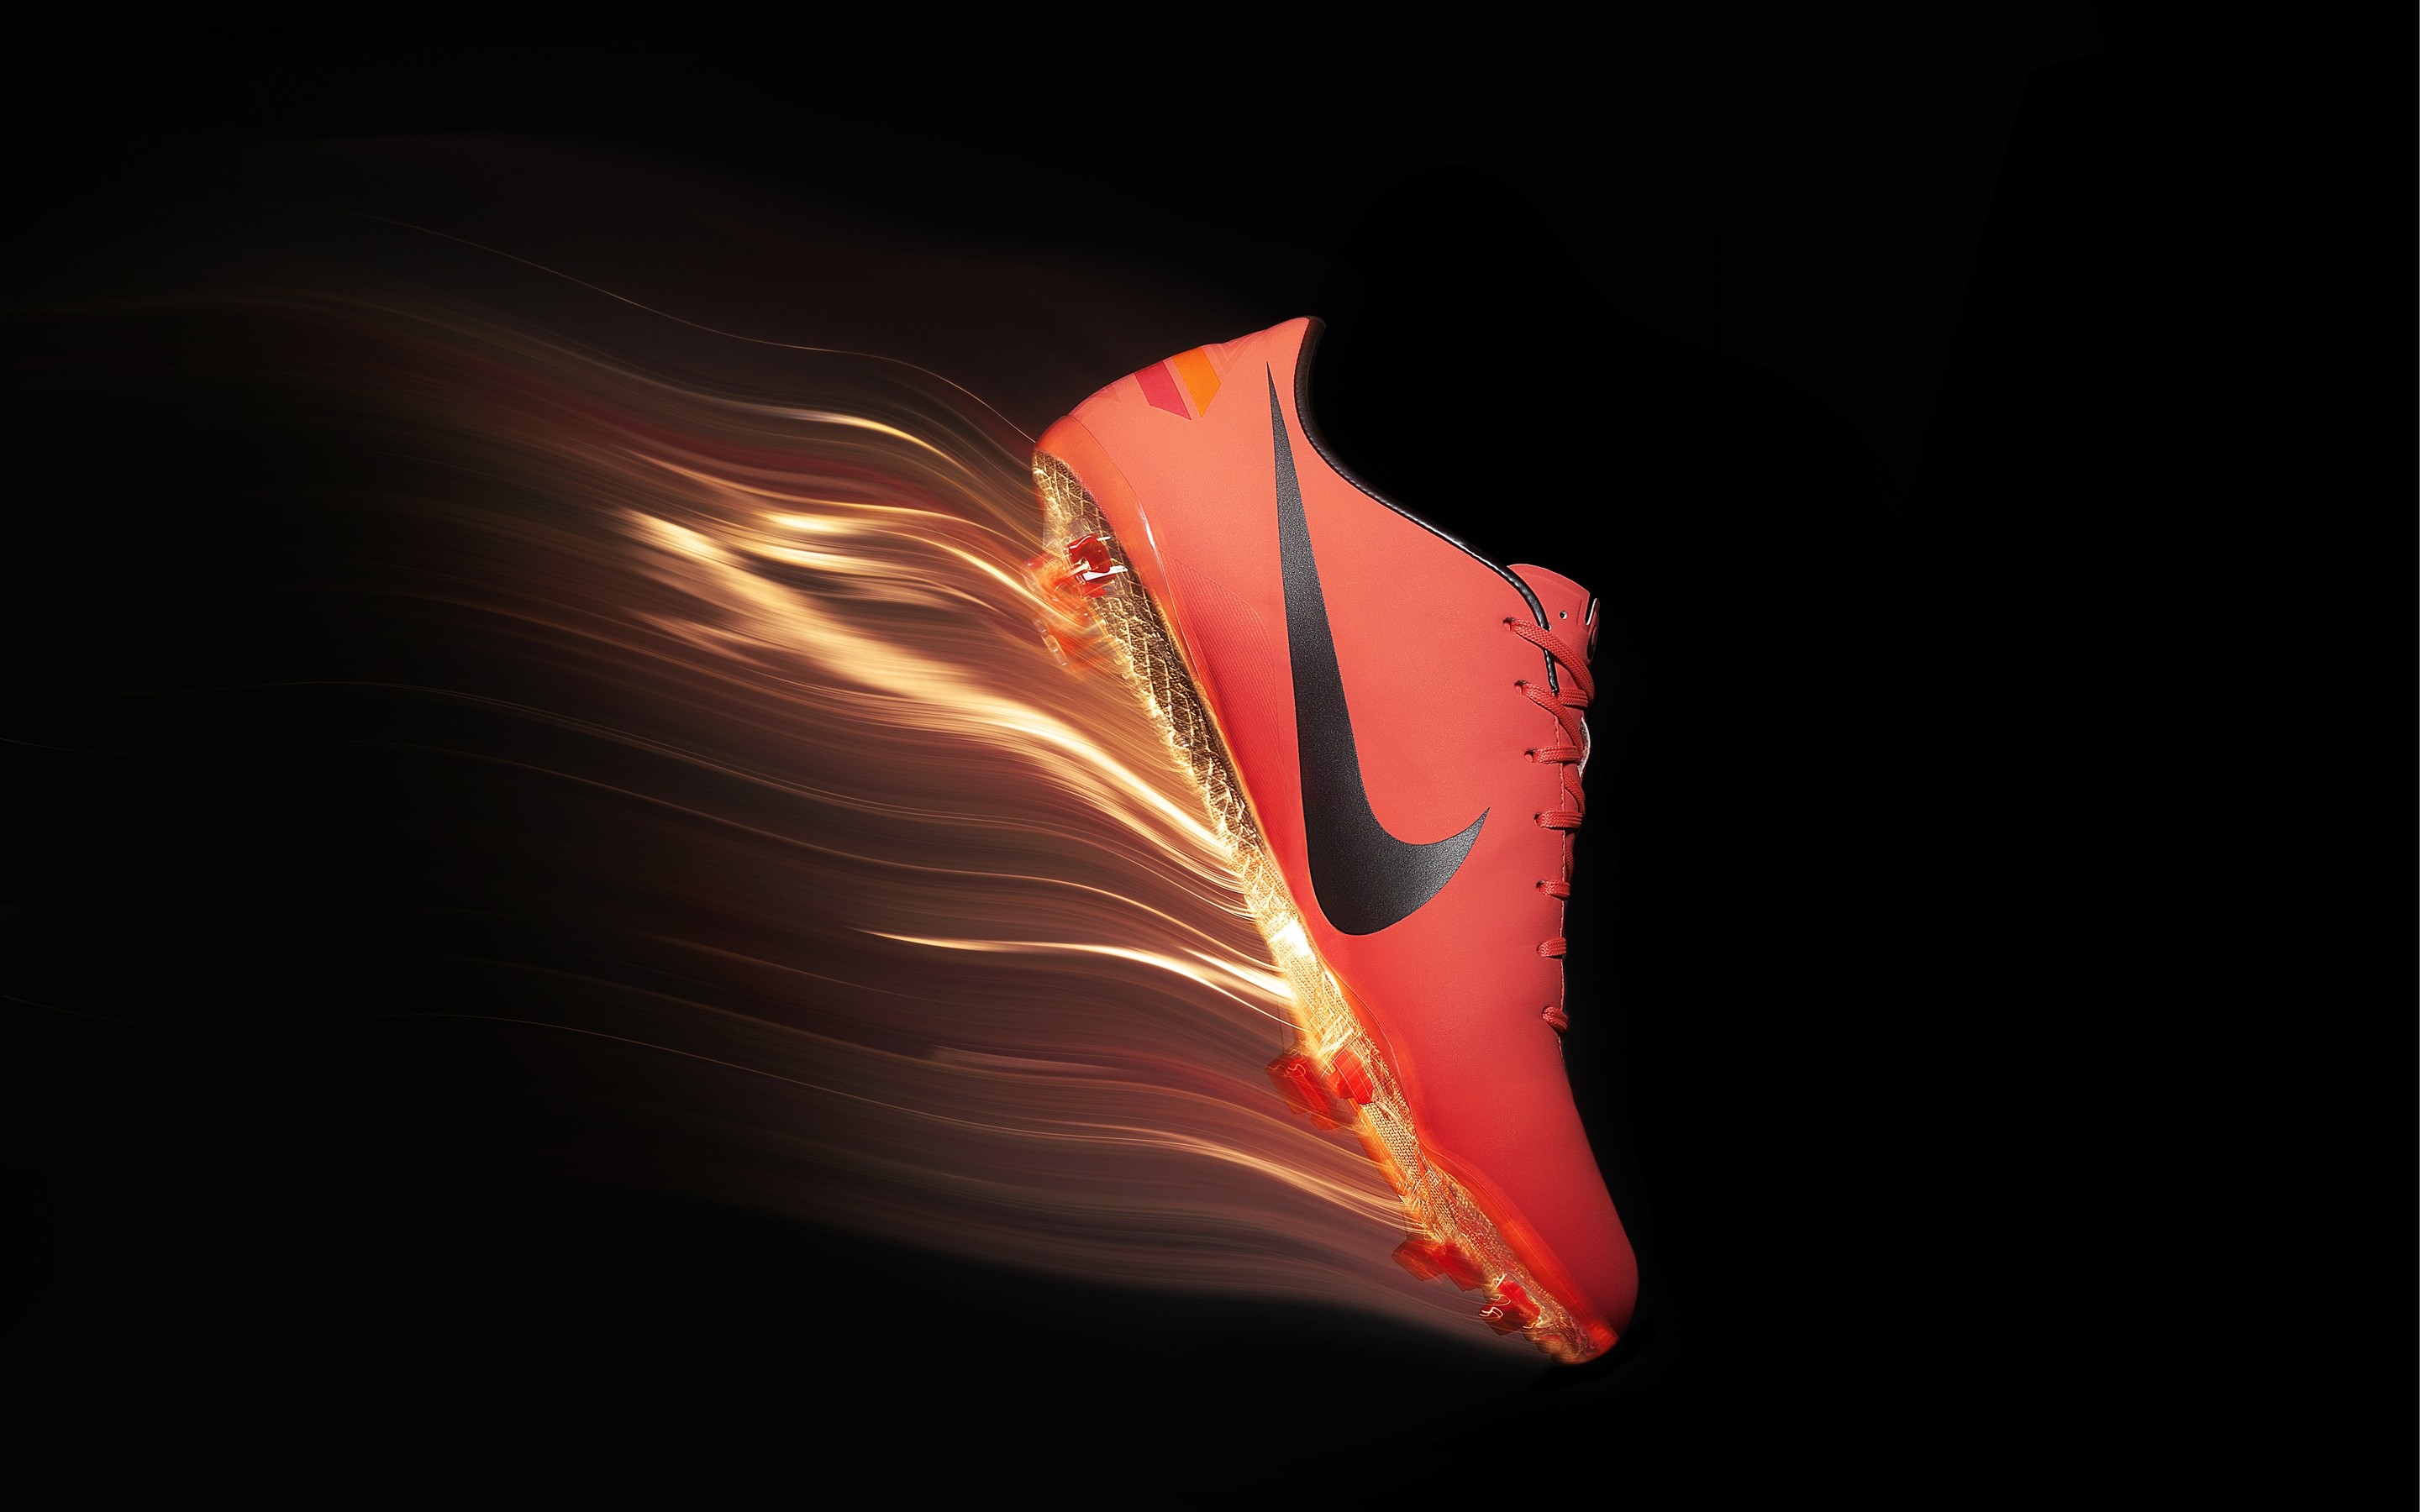 2880x1800 Wallpaper Nike mercurial, Boots, Soccer, Fire